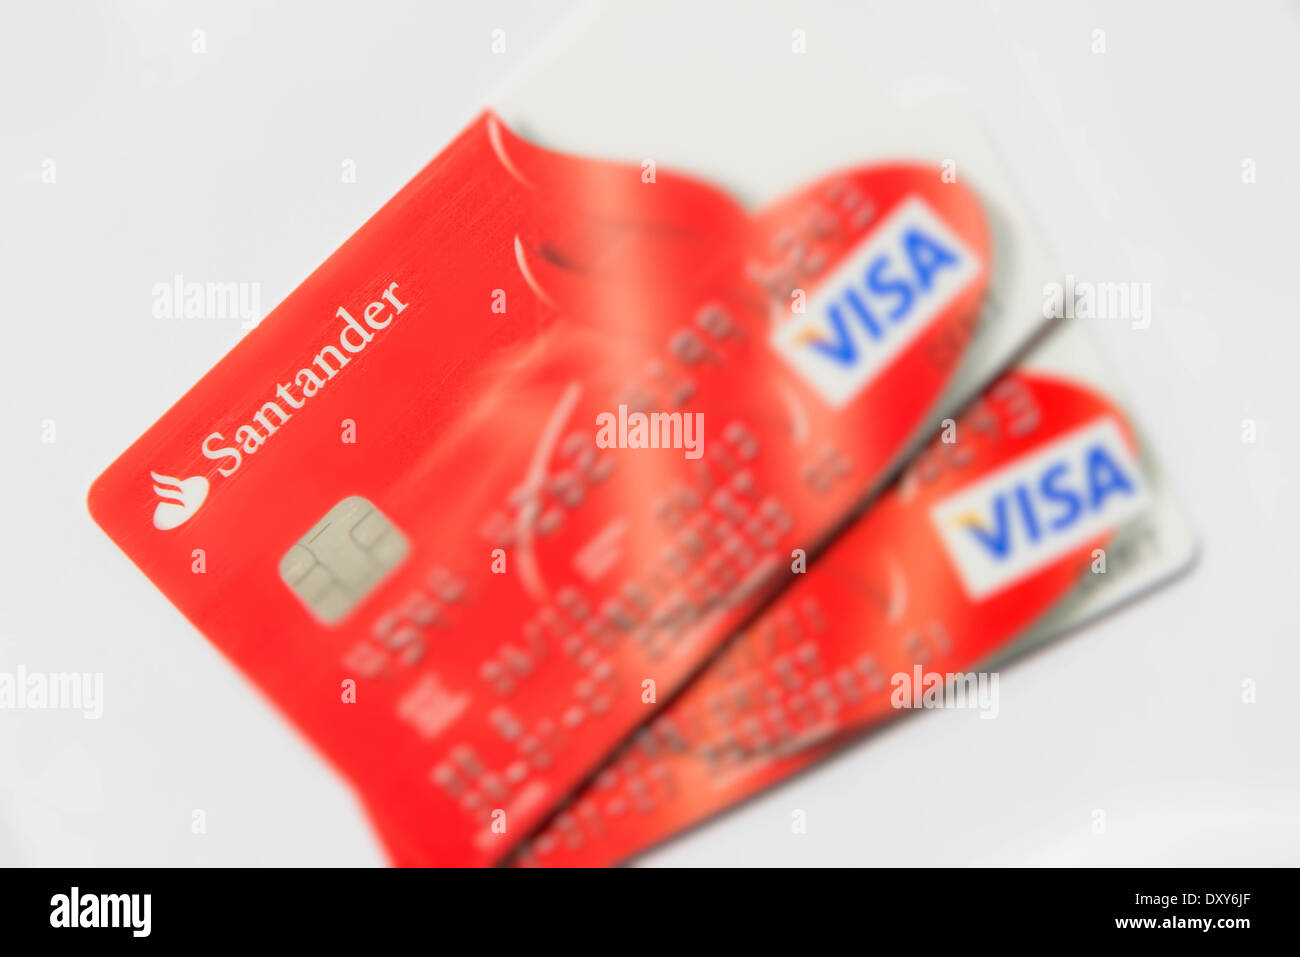 Santander Visa Bank Cards Stock Photo 68210087 Alamy